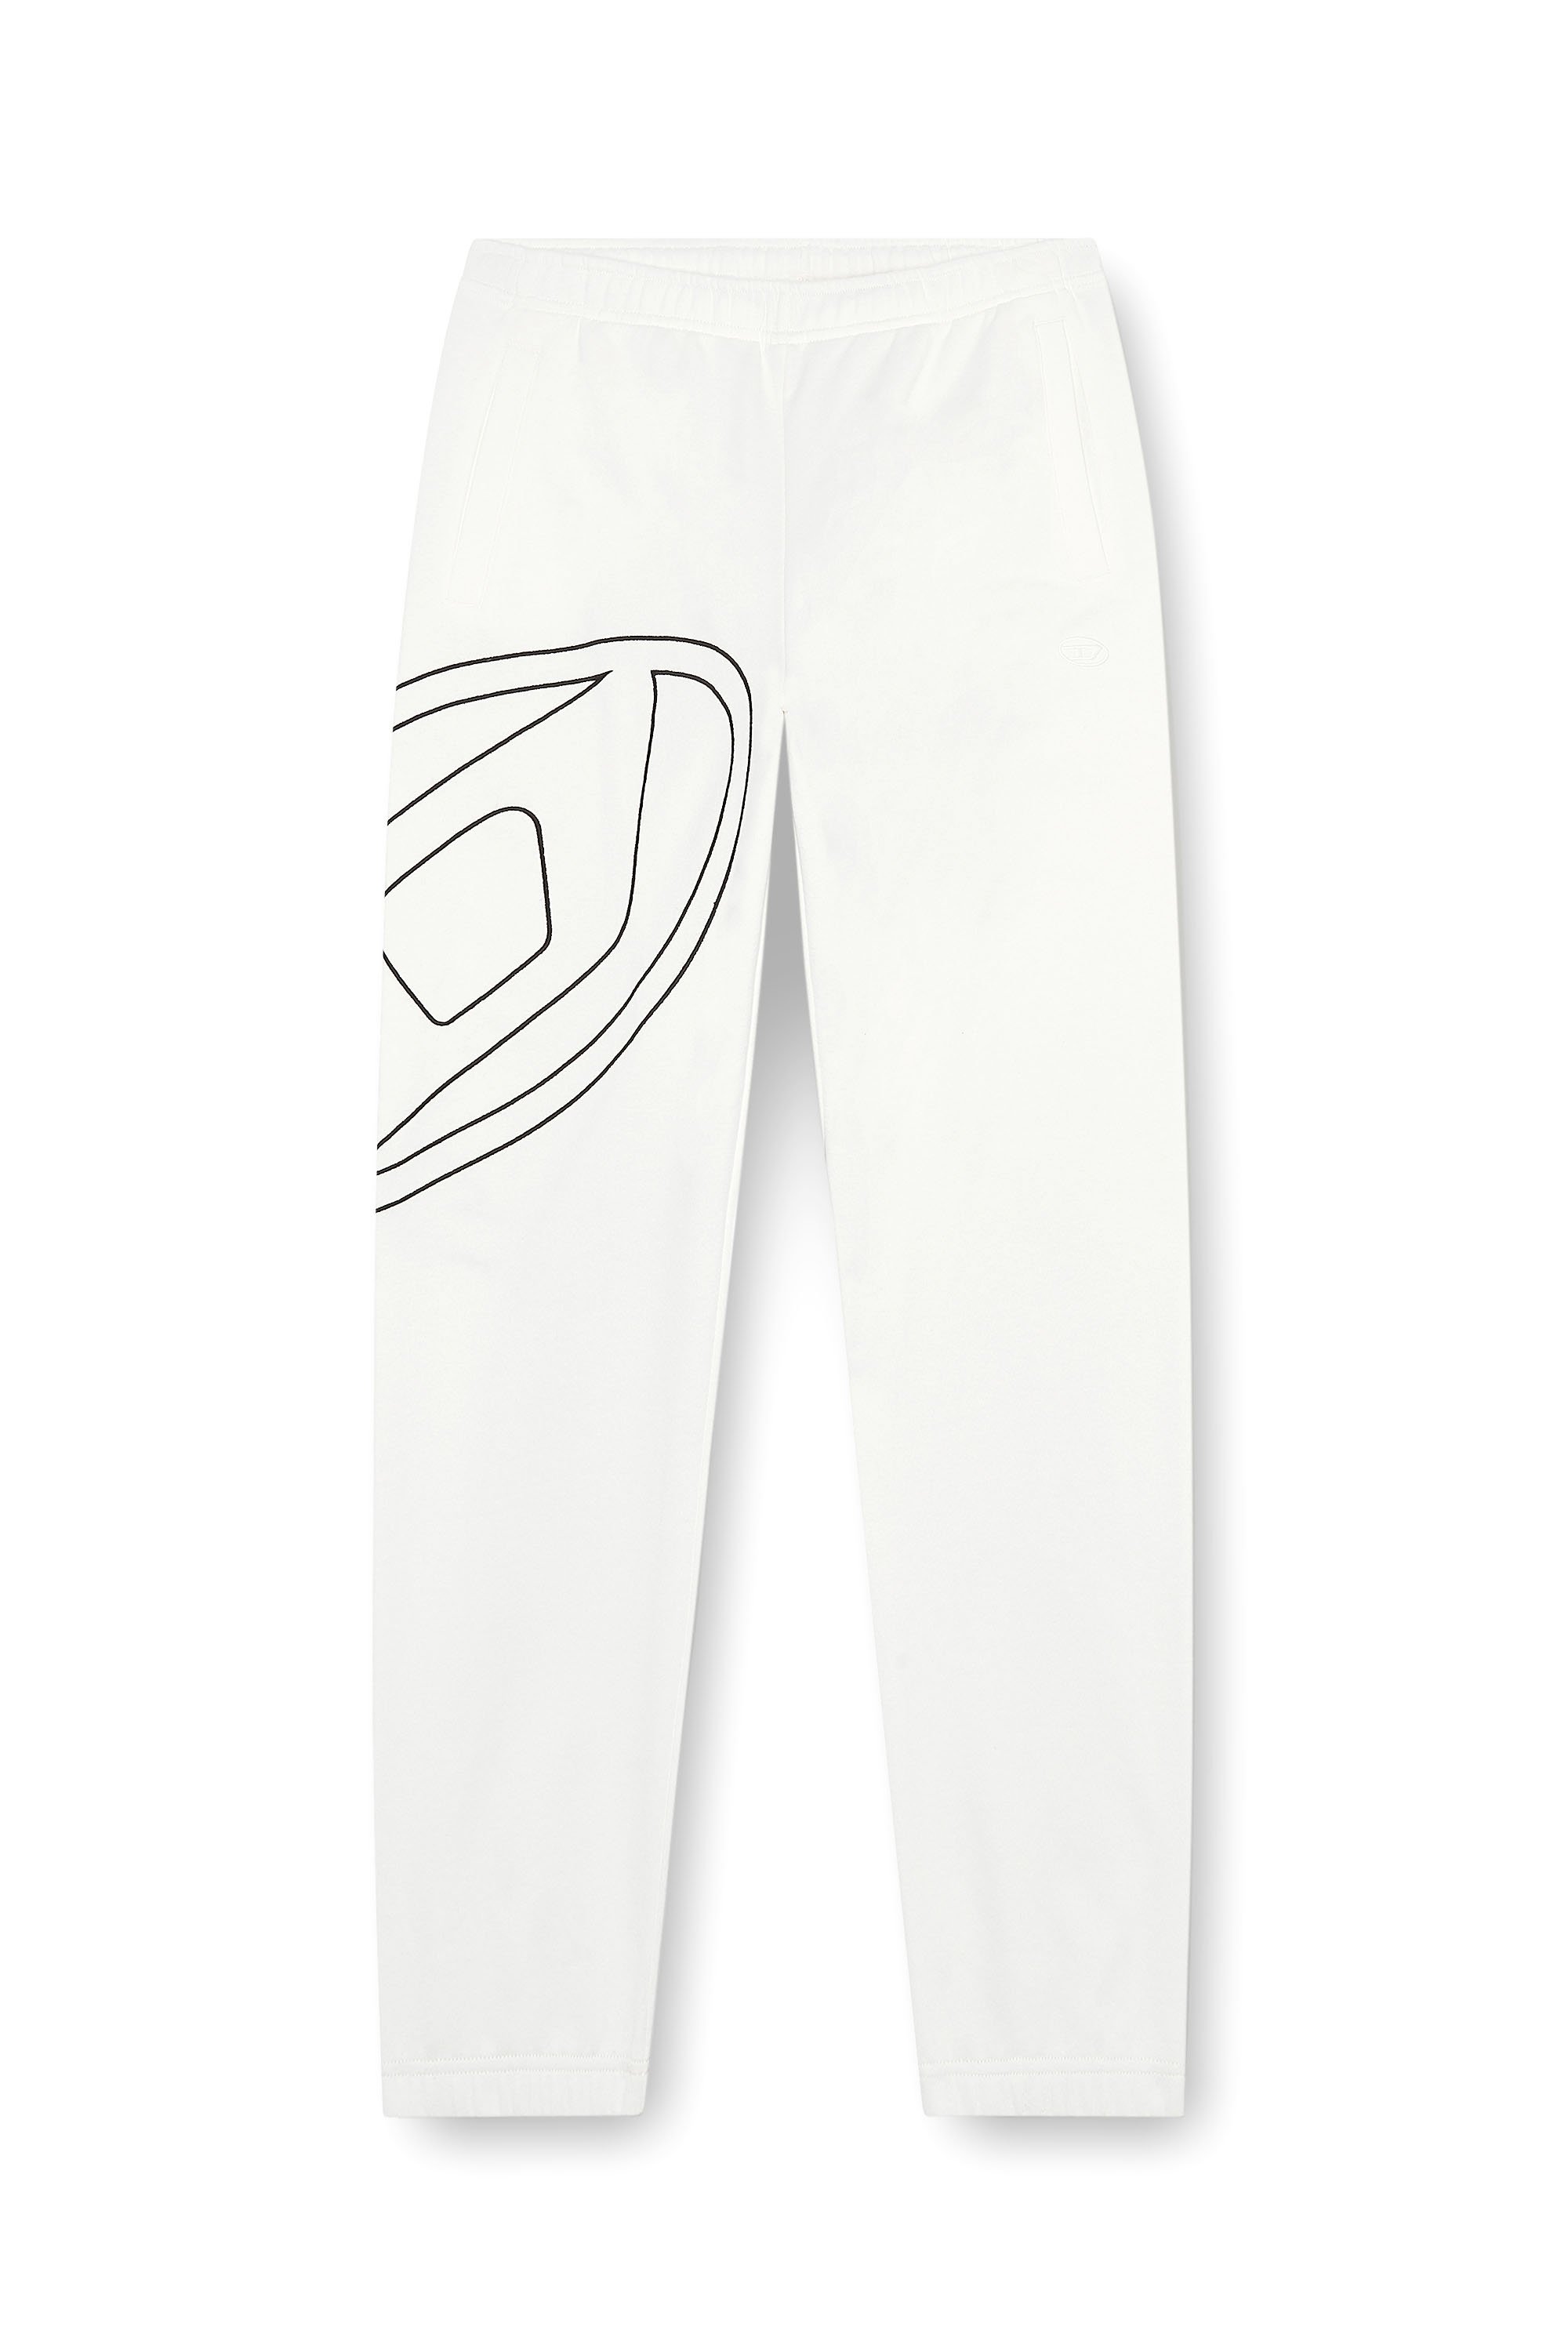 Diesel - P-MARKY-MEGOVAL-D, Hombre Pantalones deportivos con oval D extragrande in Blanco - Image 3